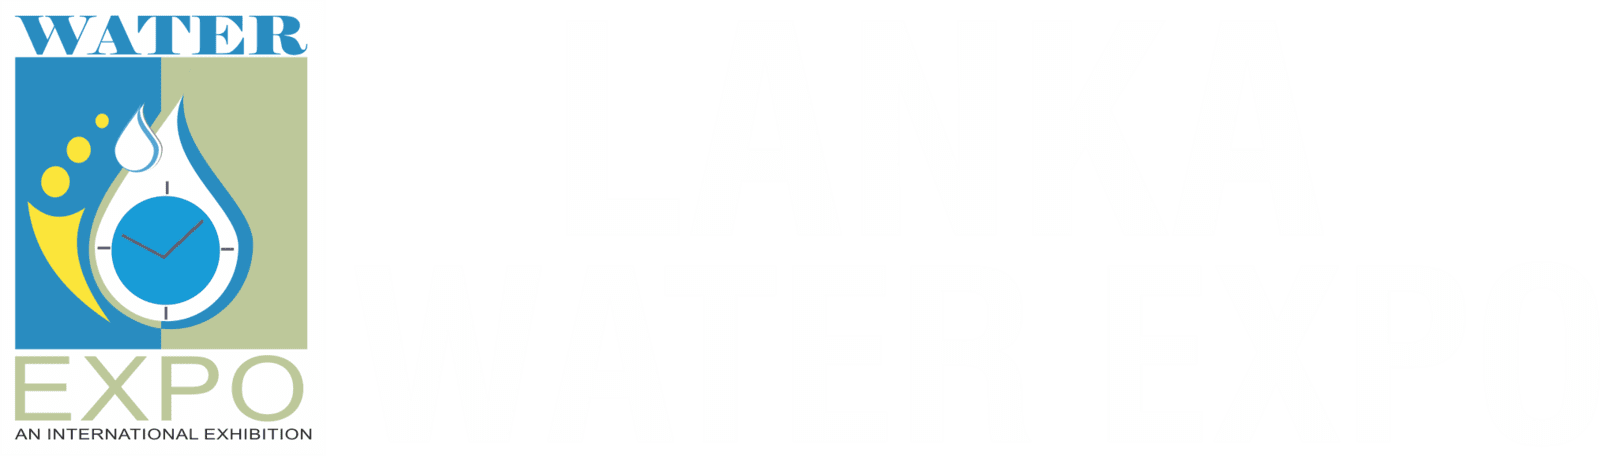 Lankawaterexpo